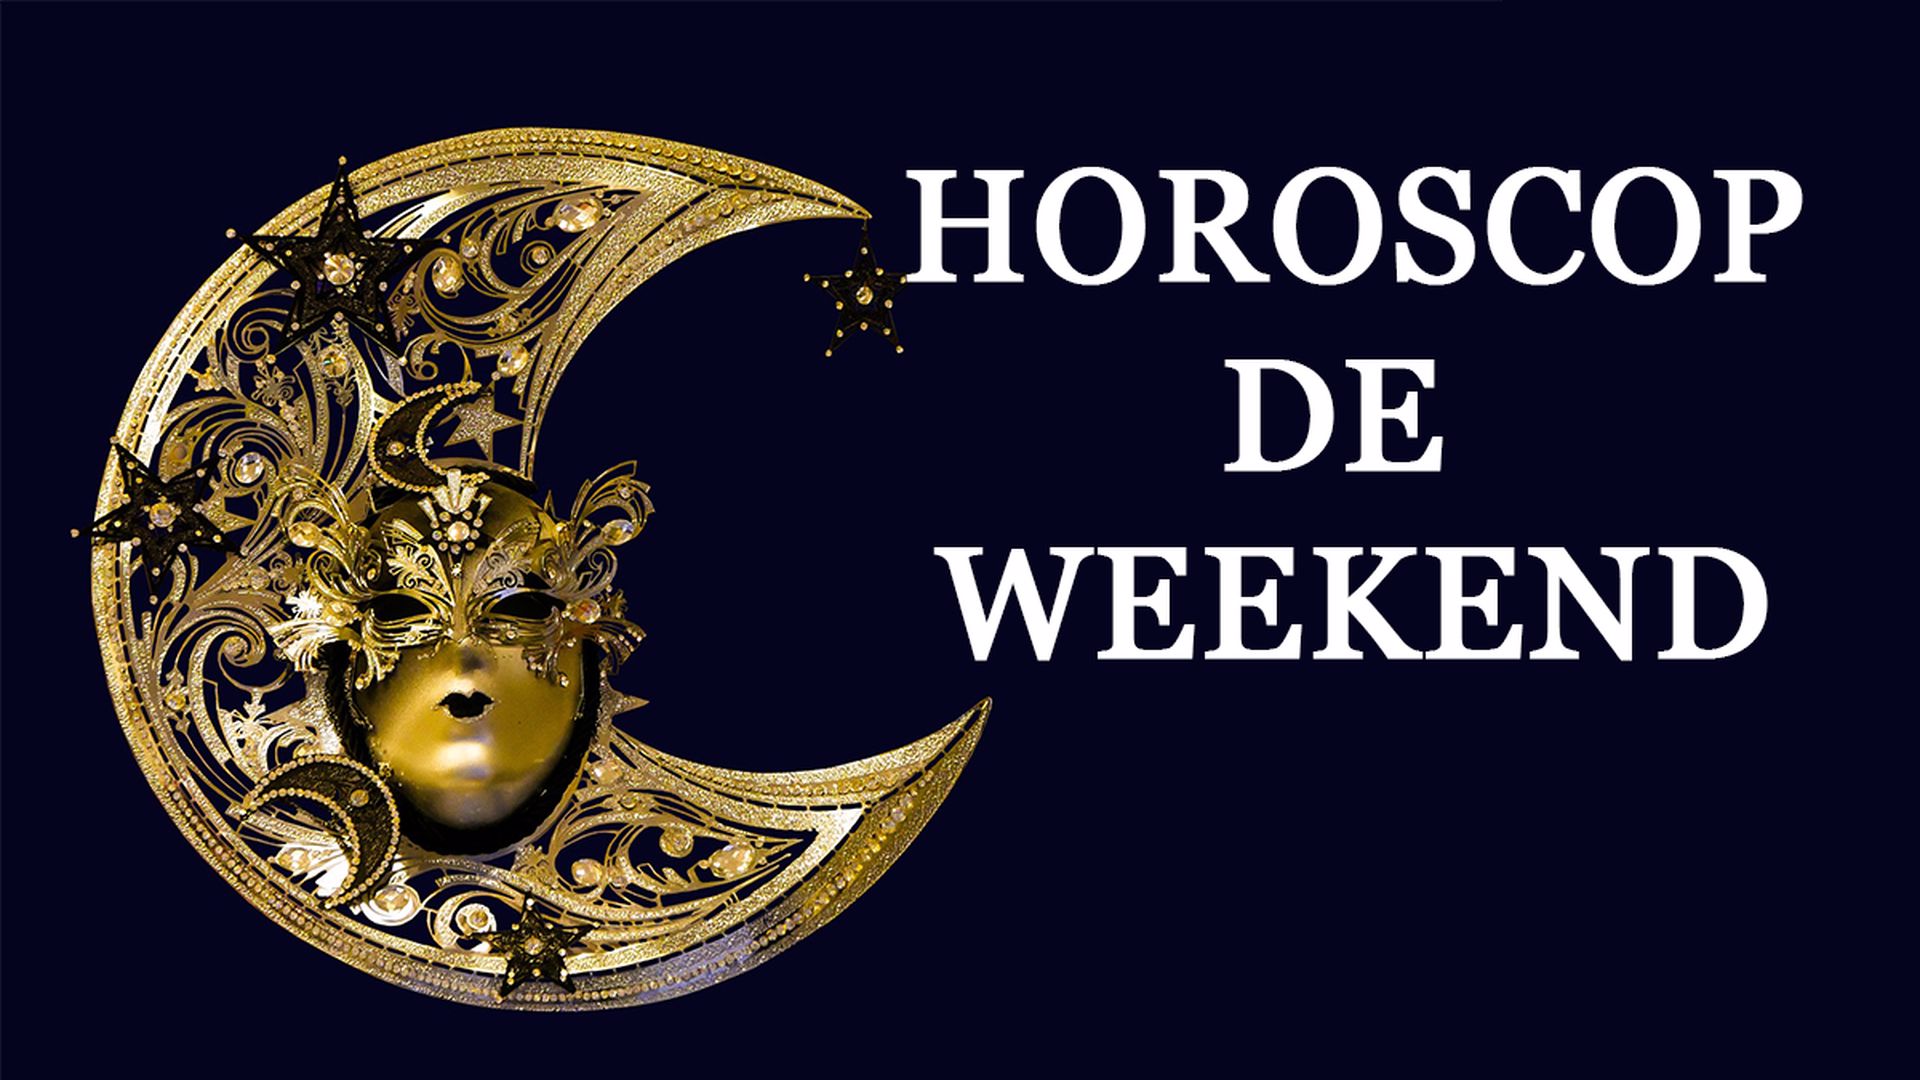 Horoscop de weekend 20-21 iunie 2020. Se anunță un weekend de zile mari